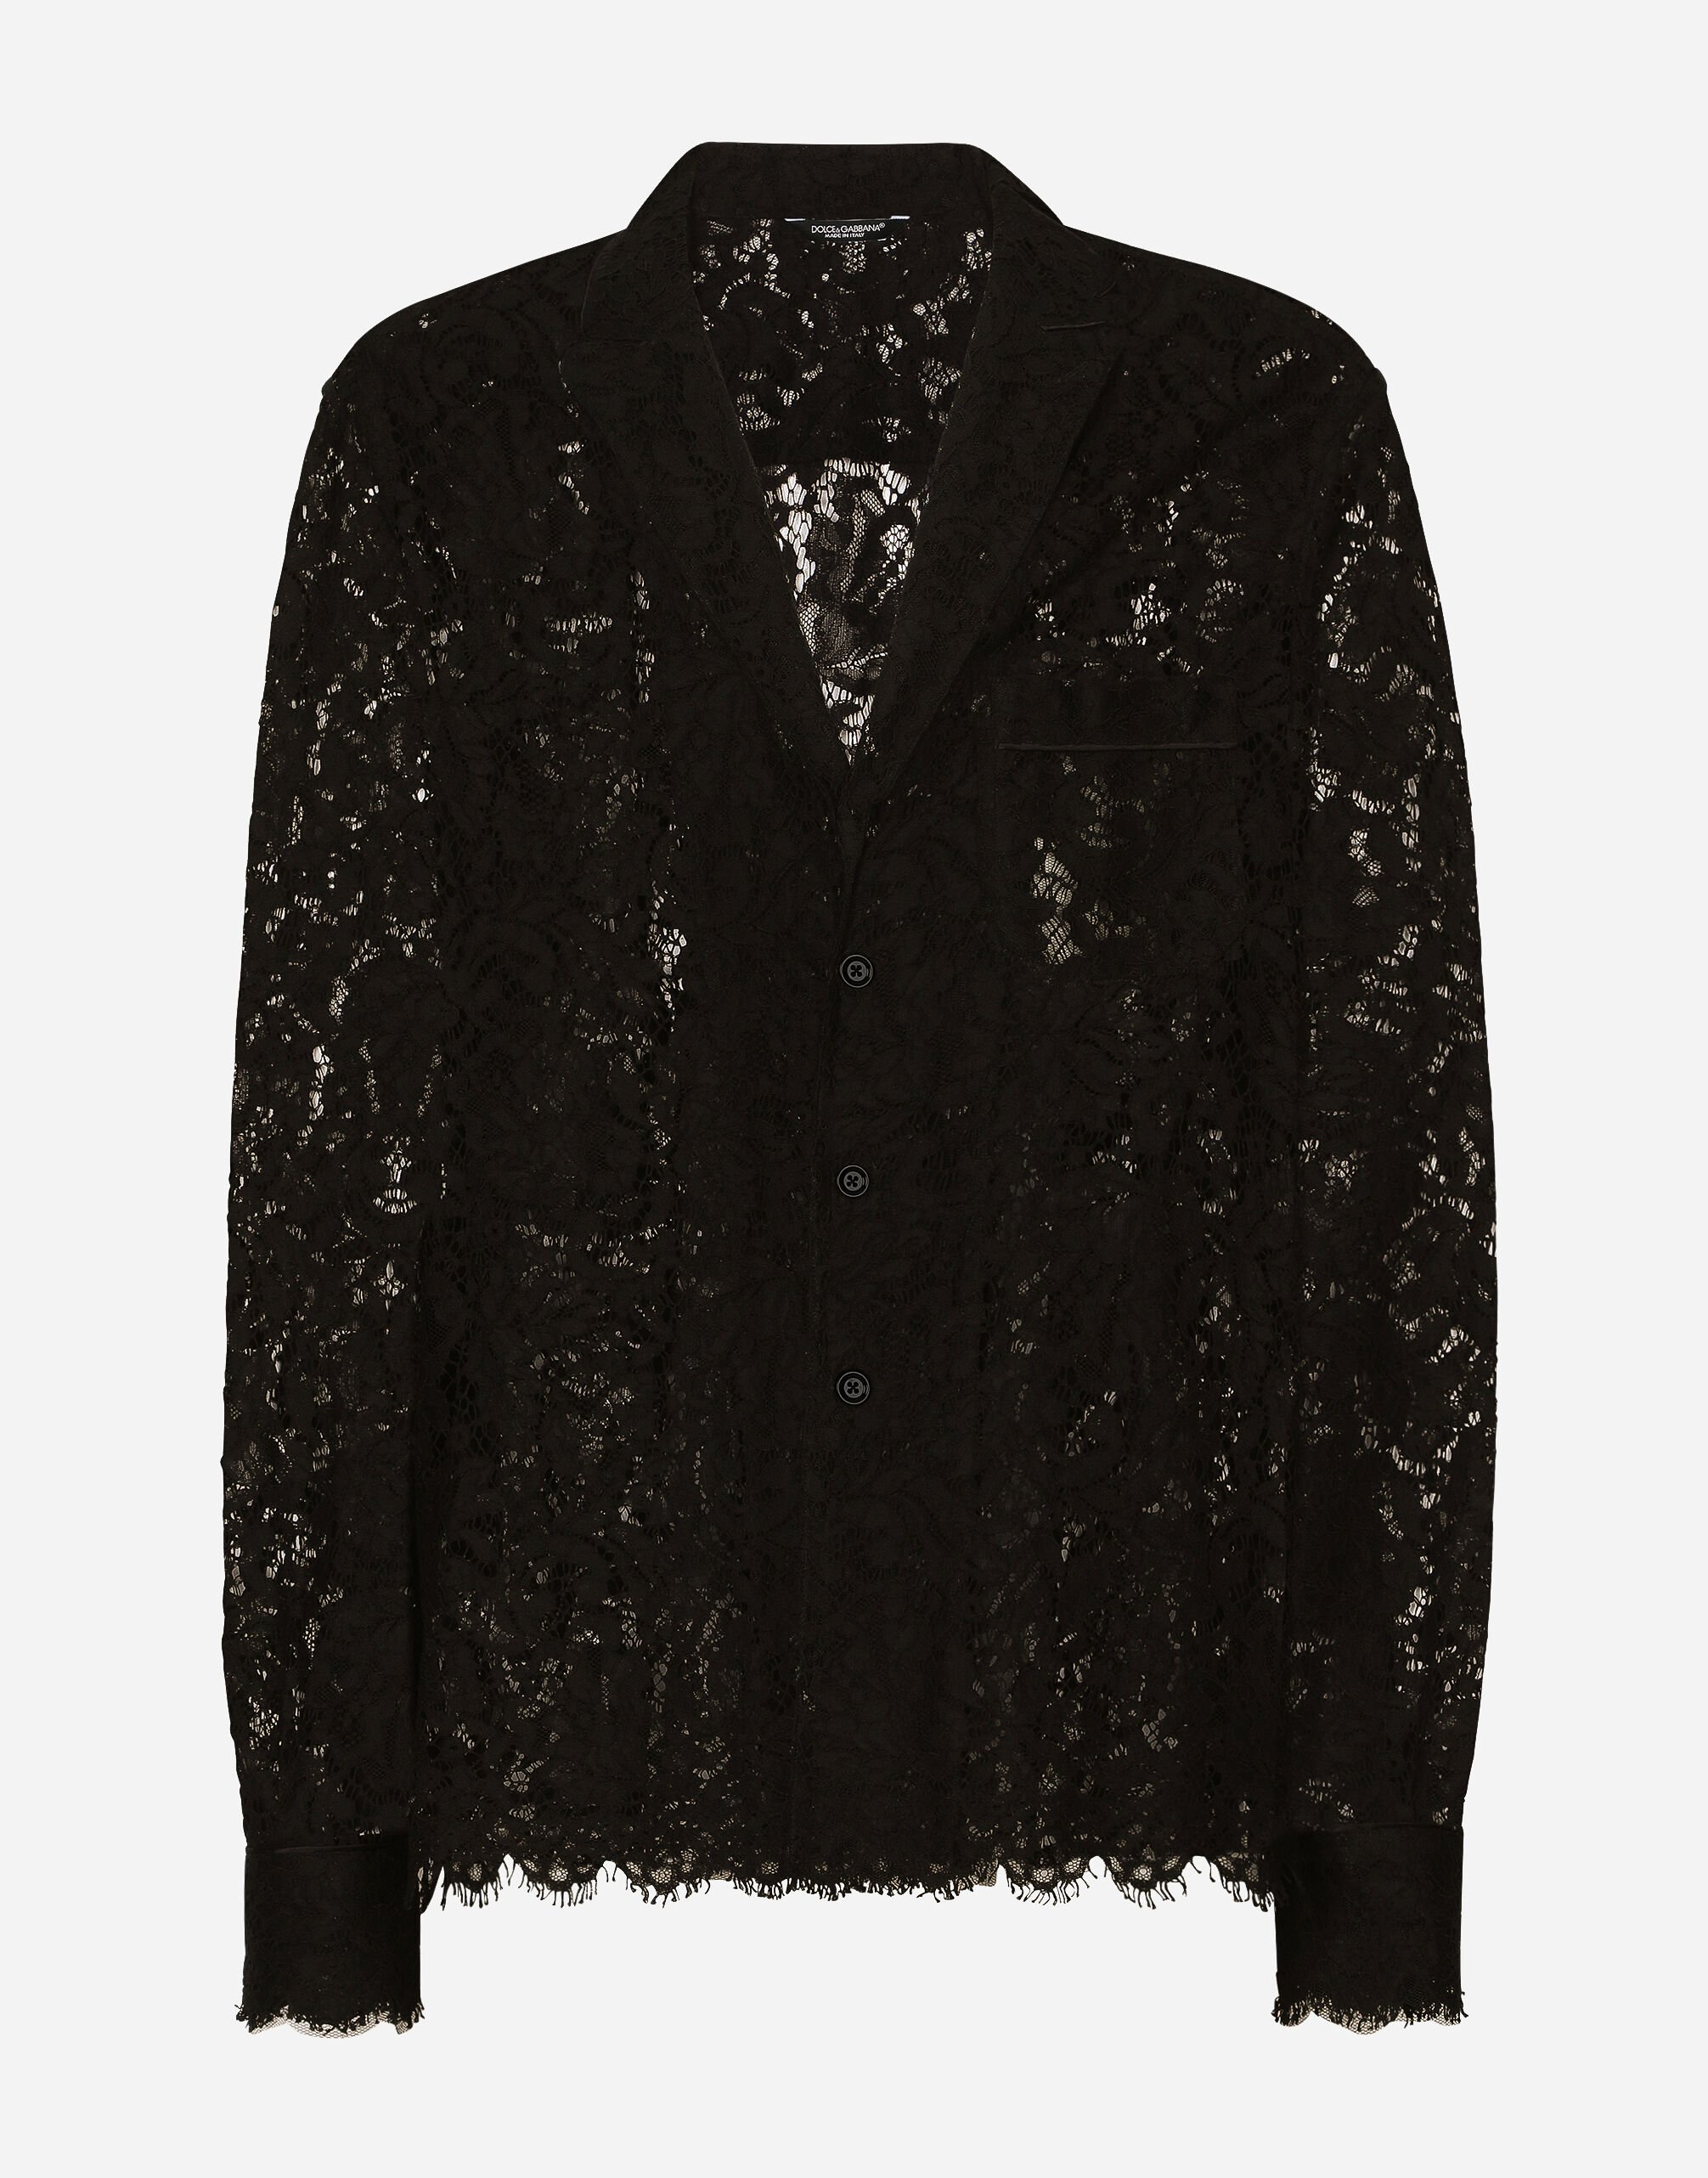 Dolce&Gabbana Cordonetto lace shirt Black F79BRTHLM9K